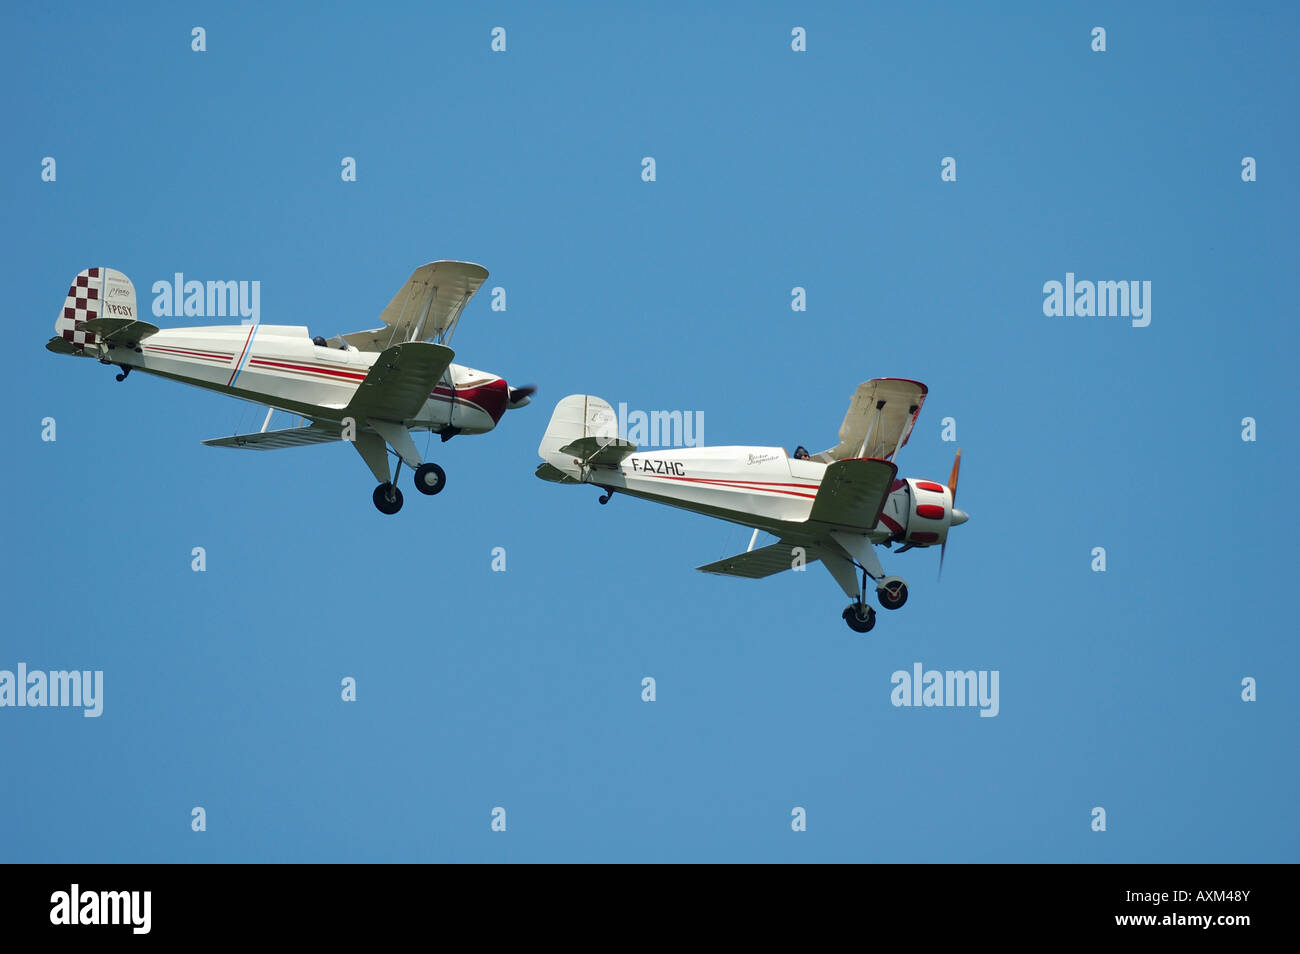 Old 30's German biplanes  Bucker Bu 131 Jungmann (left) and Bucker Bu 133 Jungmeister (right), air show, La Ferte Alais, France Stock Photo